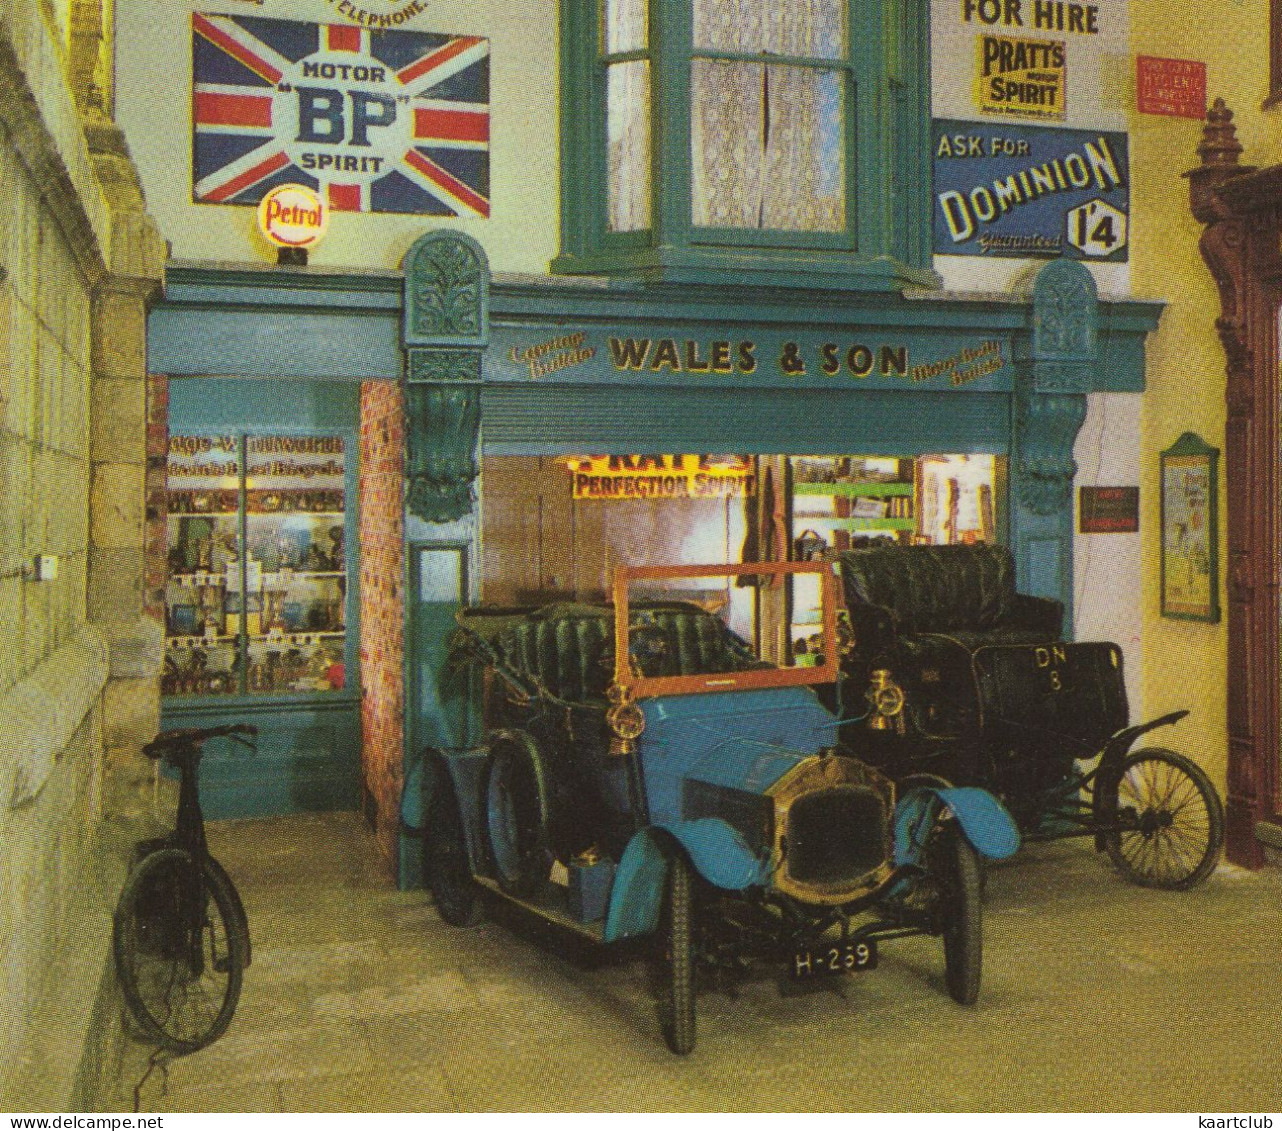 York: 1909 COLIBRI MOTOR CAR, 1899 GROUT STEAM CAR, 2 OLD BICYCLES - 'Motor B.P. Spirit' - Castle Museum Garage - (U.K.) - PKW